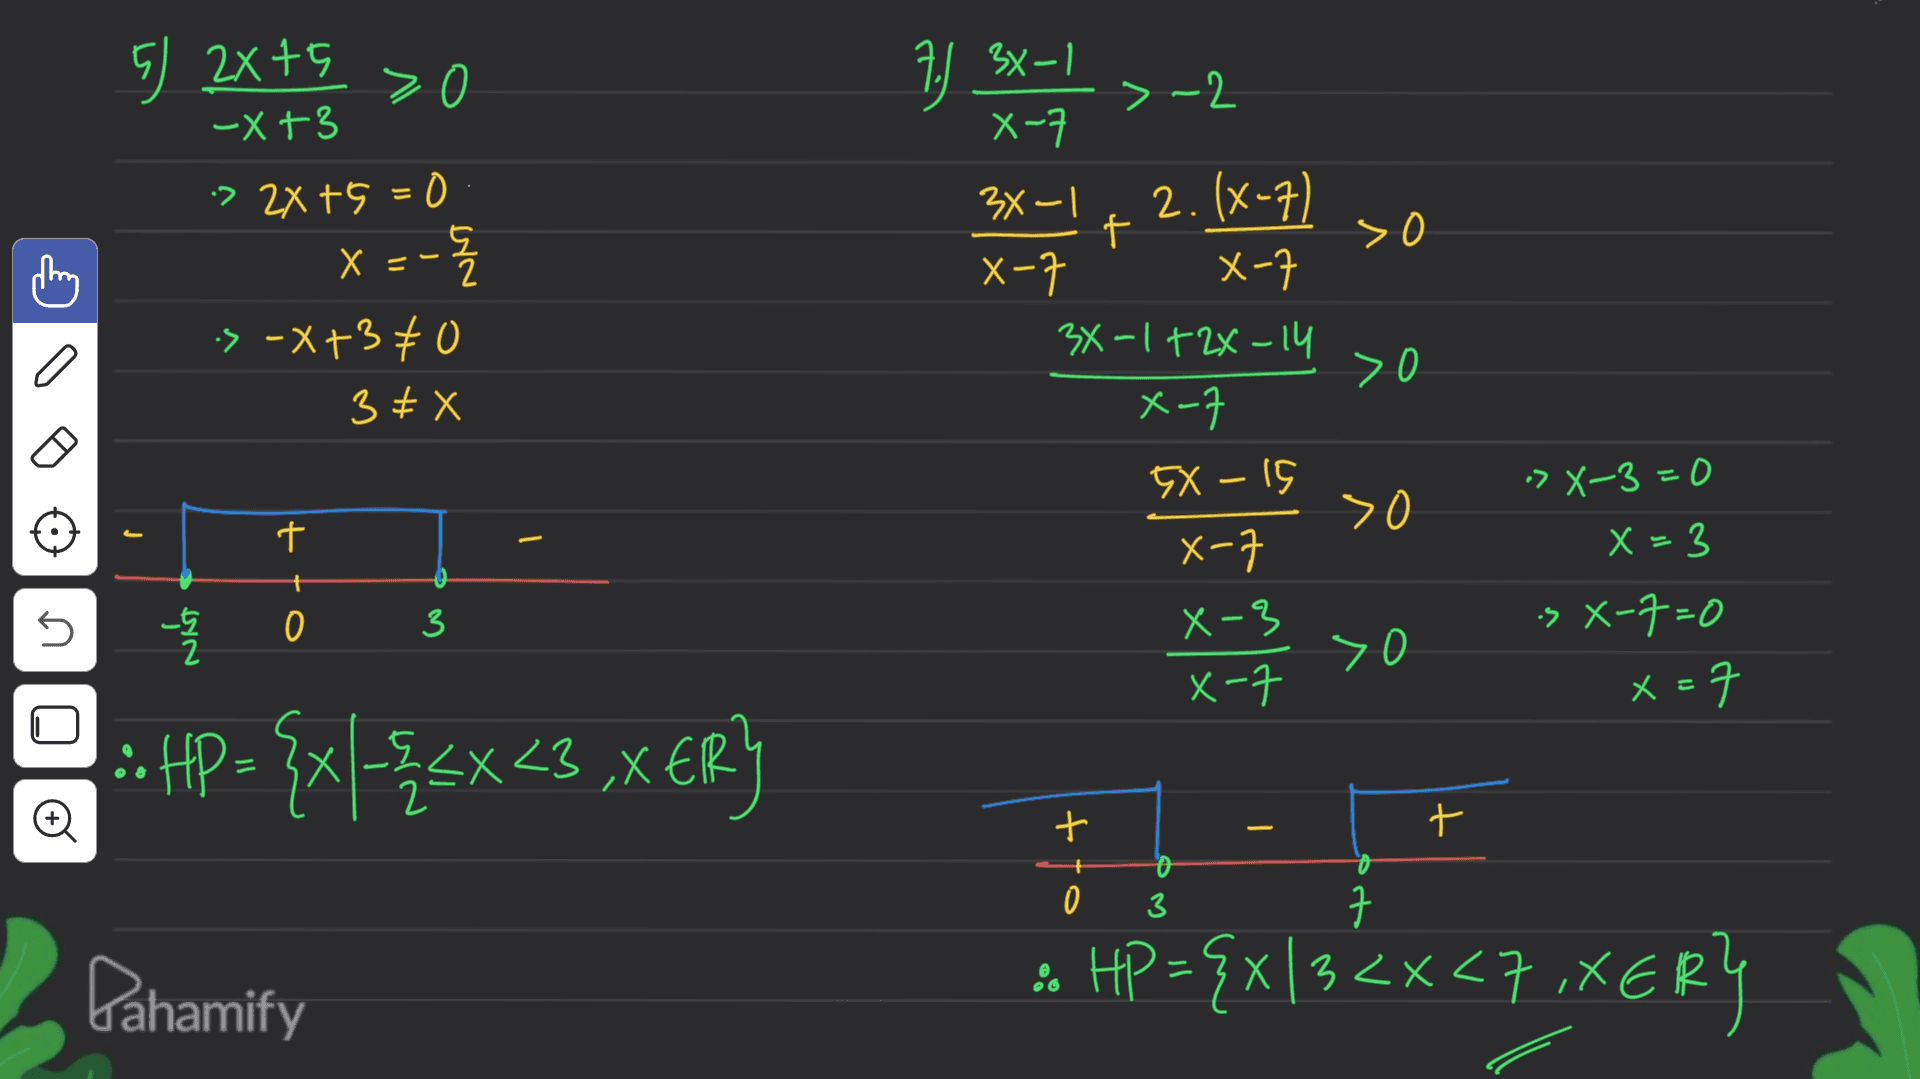 5)_2x+5 OR 7) 3X-1 7-< -X+3 X-7 > 2x+5=0 - 3メー| X-7 X = - Ž 2. (x-7) ( t xo X-7 :> -x+370 hi-xZ+ 1-XL a > 0 X FE X-7 5X -15 X-7 3 > 0 > X-3=0 x=3 J t - 3 0 NAS s ם X-22 >o is X-7=0 x=7 (79X' 7x7}-{x} - CH: X o + t + 0 3 t Dahamify & x<x7 HP ={x|3<«<7,XER ERY 